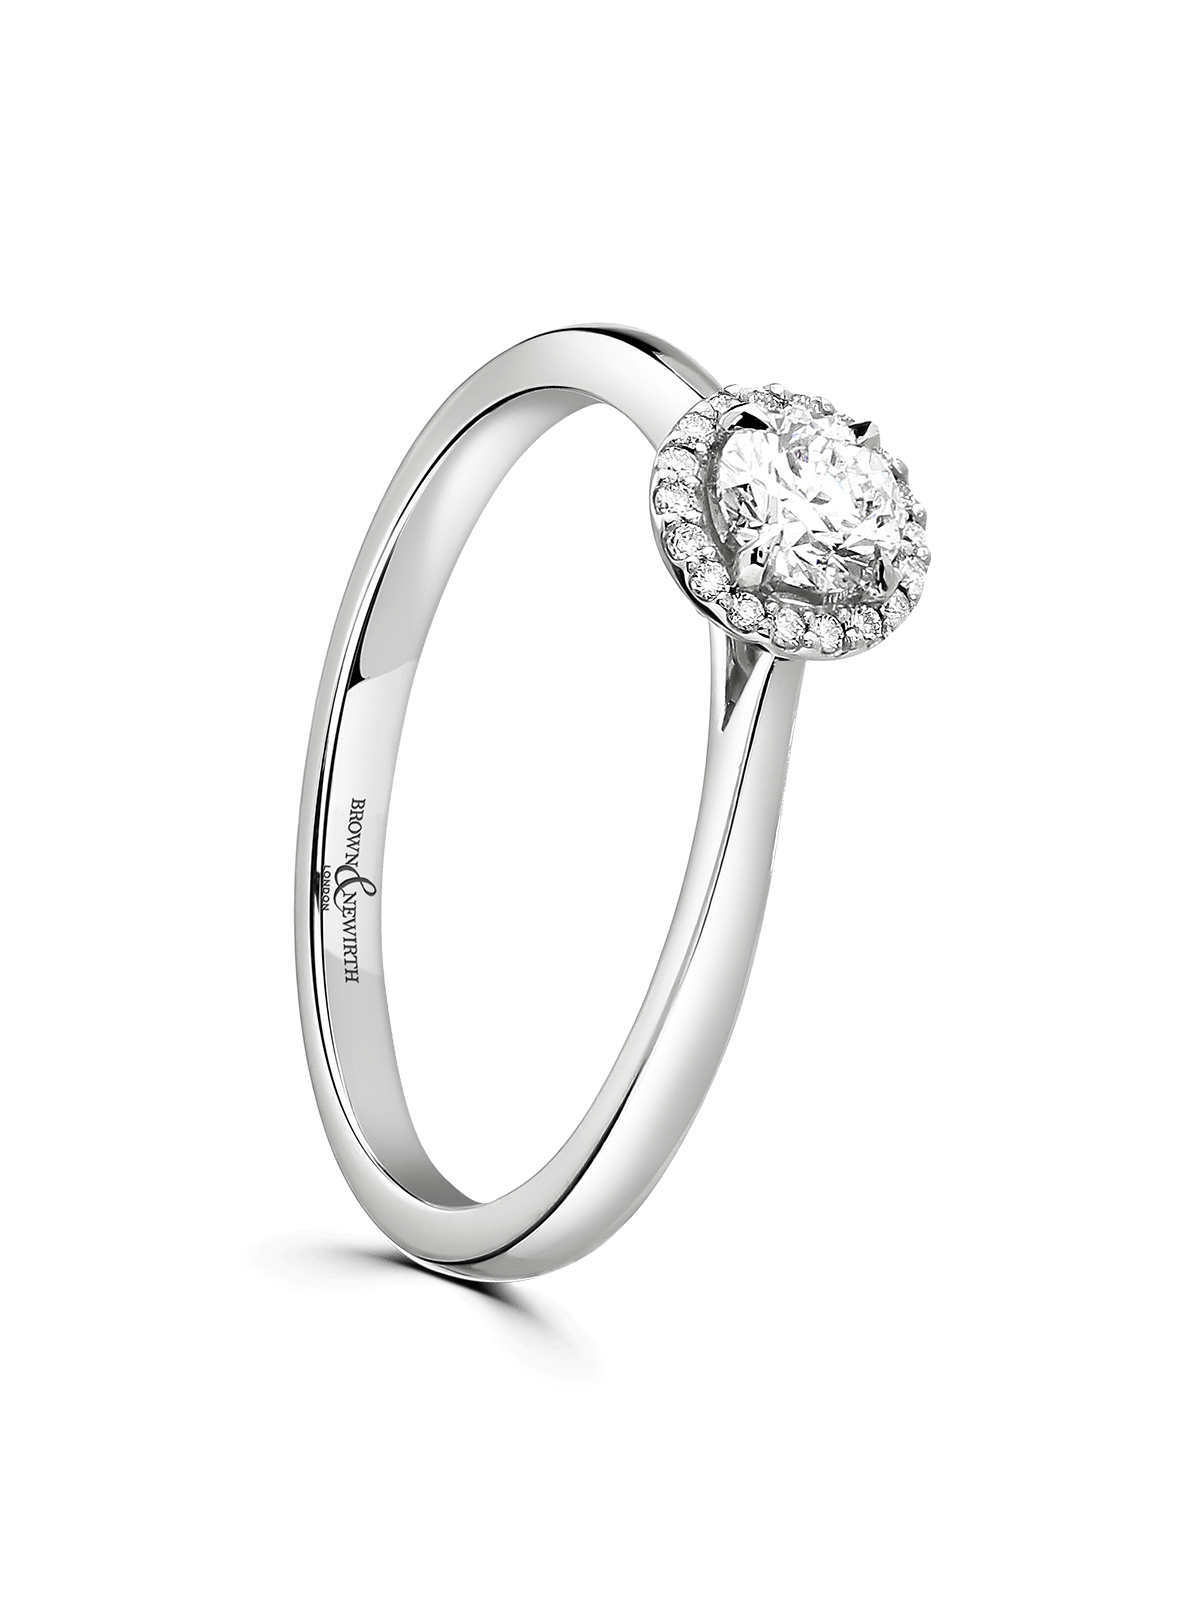 Brown & Newirth Celeste 0.25ct Brilliant Cut Diamond Halo Engagement Ring in Platinum